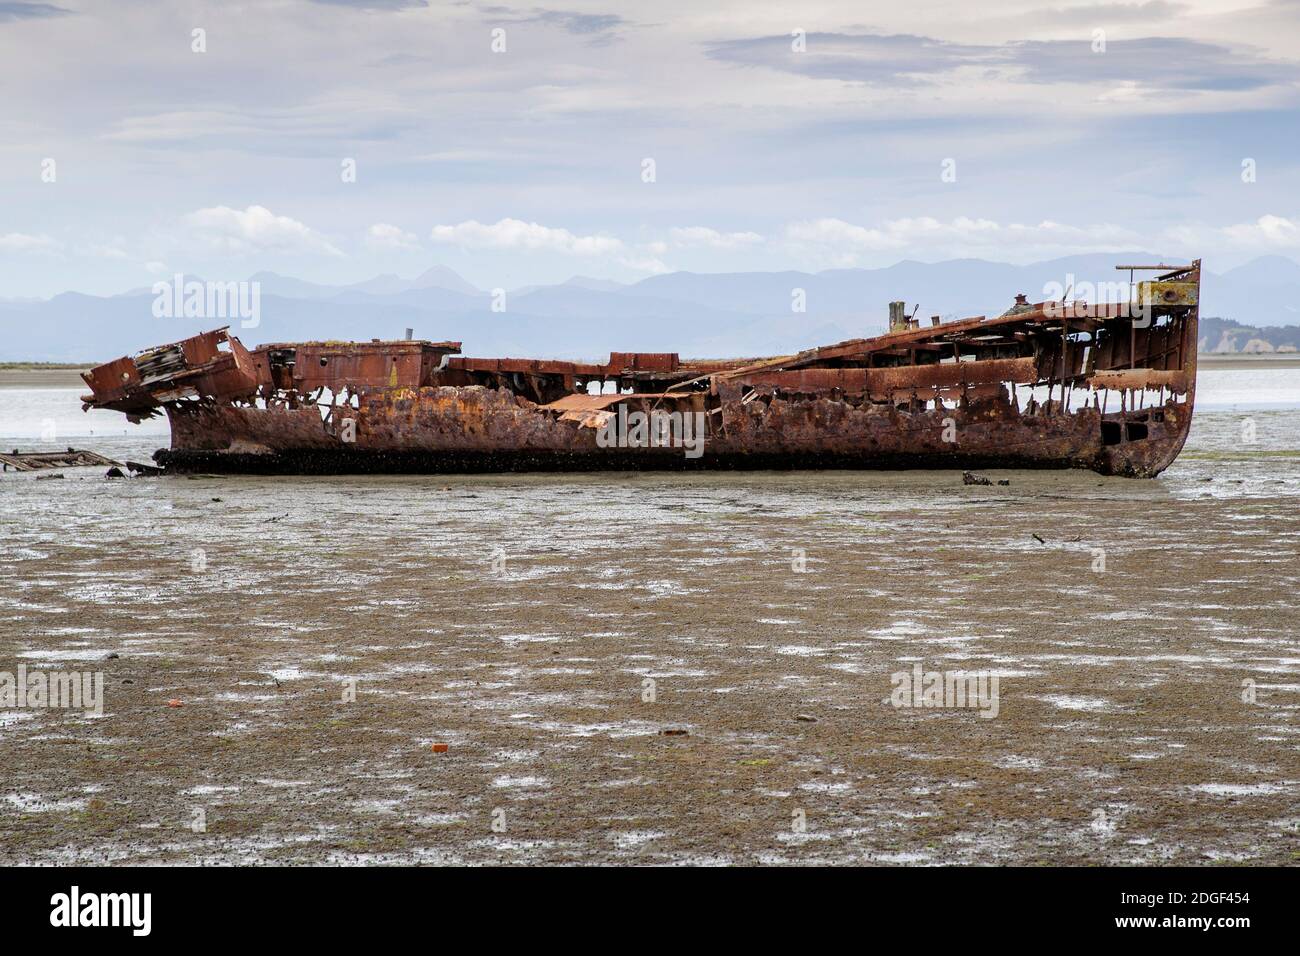 The rusted remains of the Janie Seddon shipwreck on the Motueka foreshore, Nelson Tasman, New Zealand on Saturday, November 21, 2020. Stock Photo